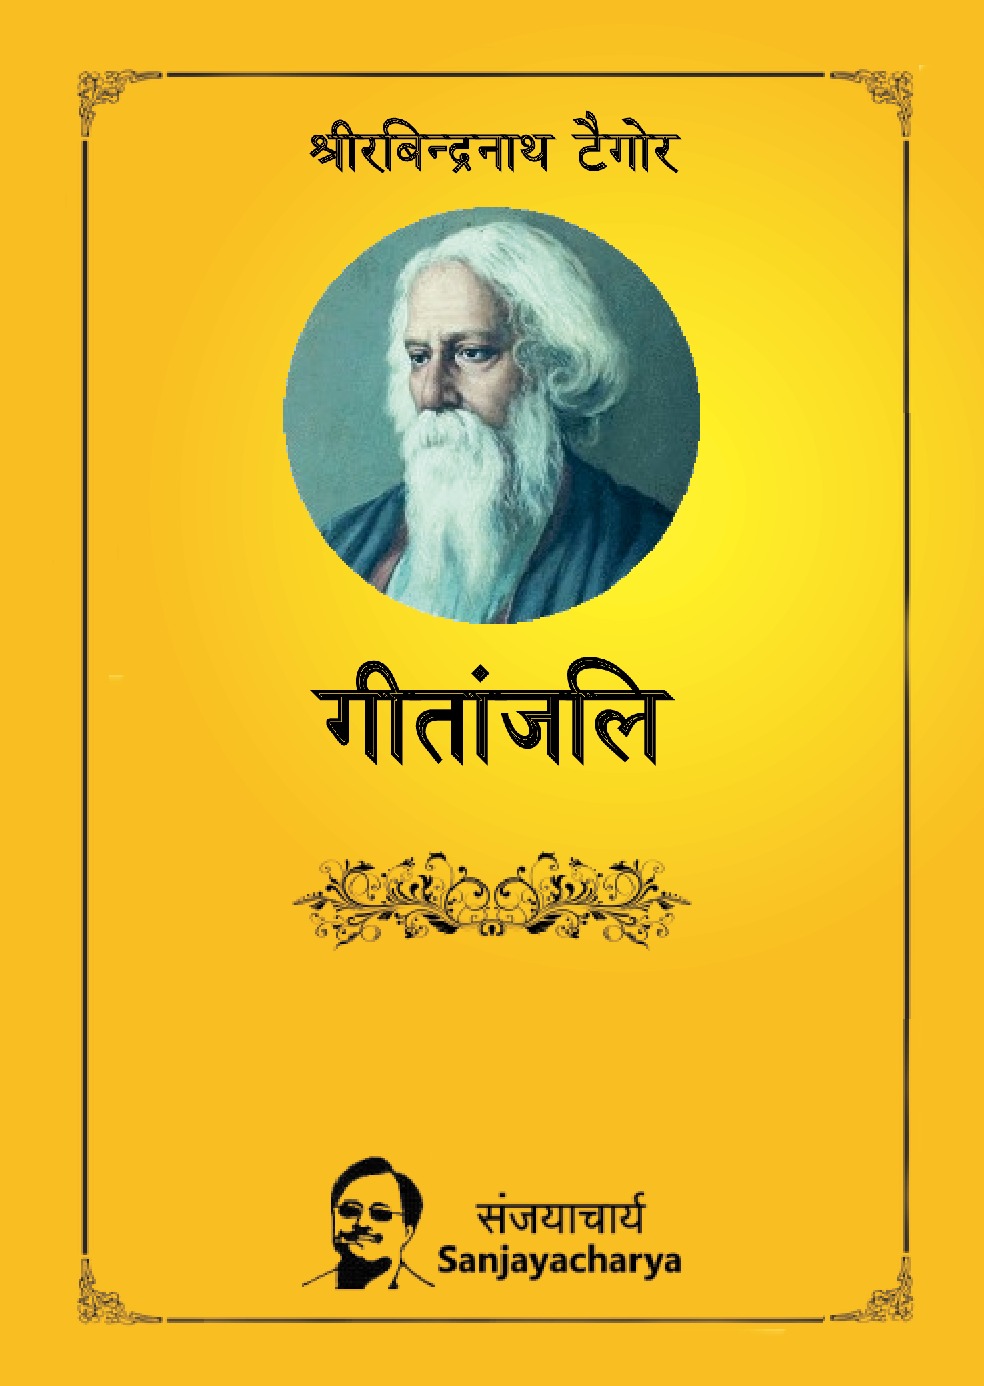 gitanjali book review in hindi